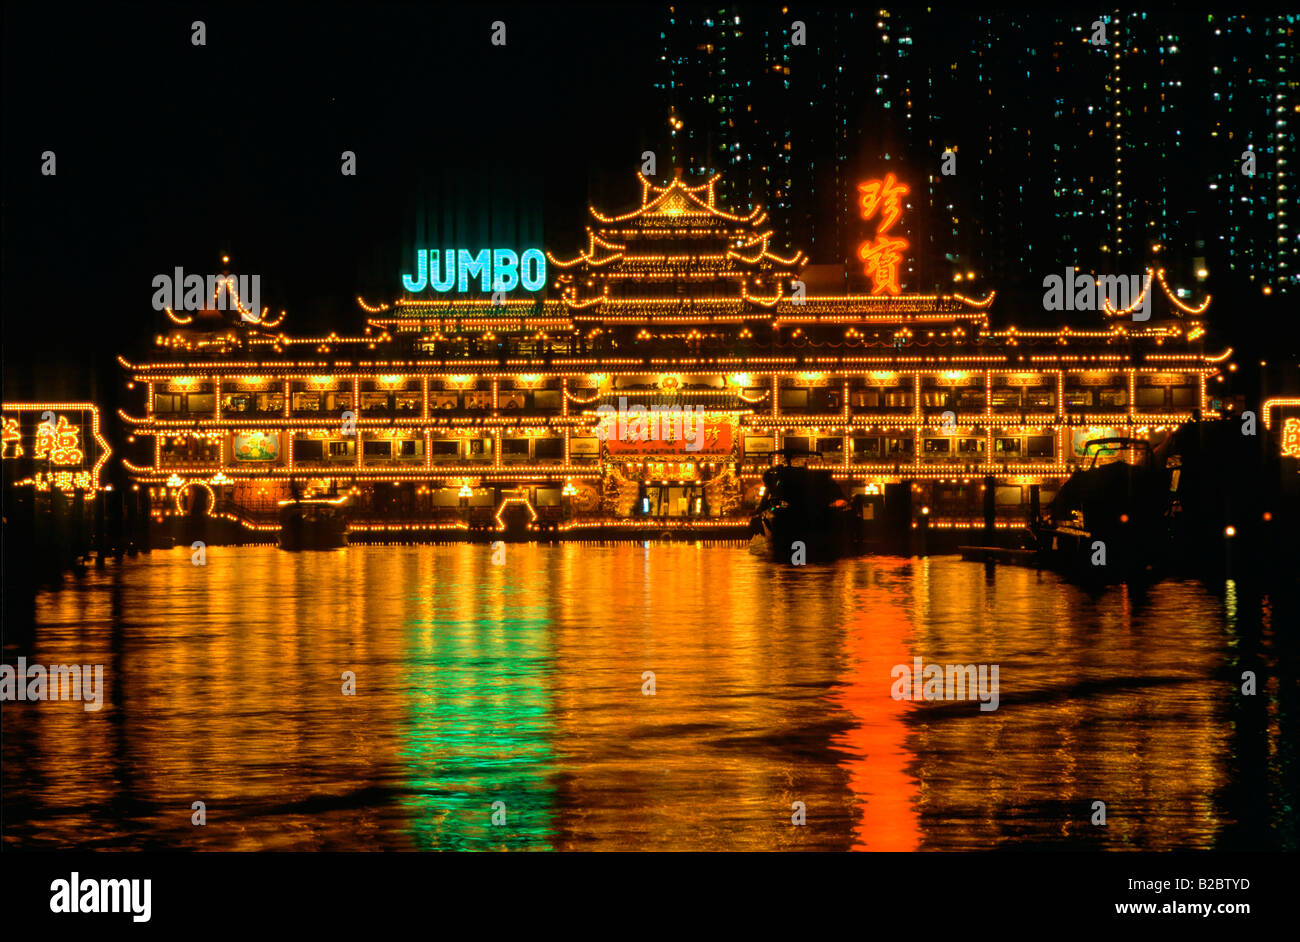 Jumbo, floating restaurant, Aberdeen, Hong Kong, China, Asia Stock Photo